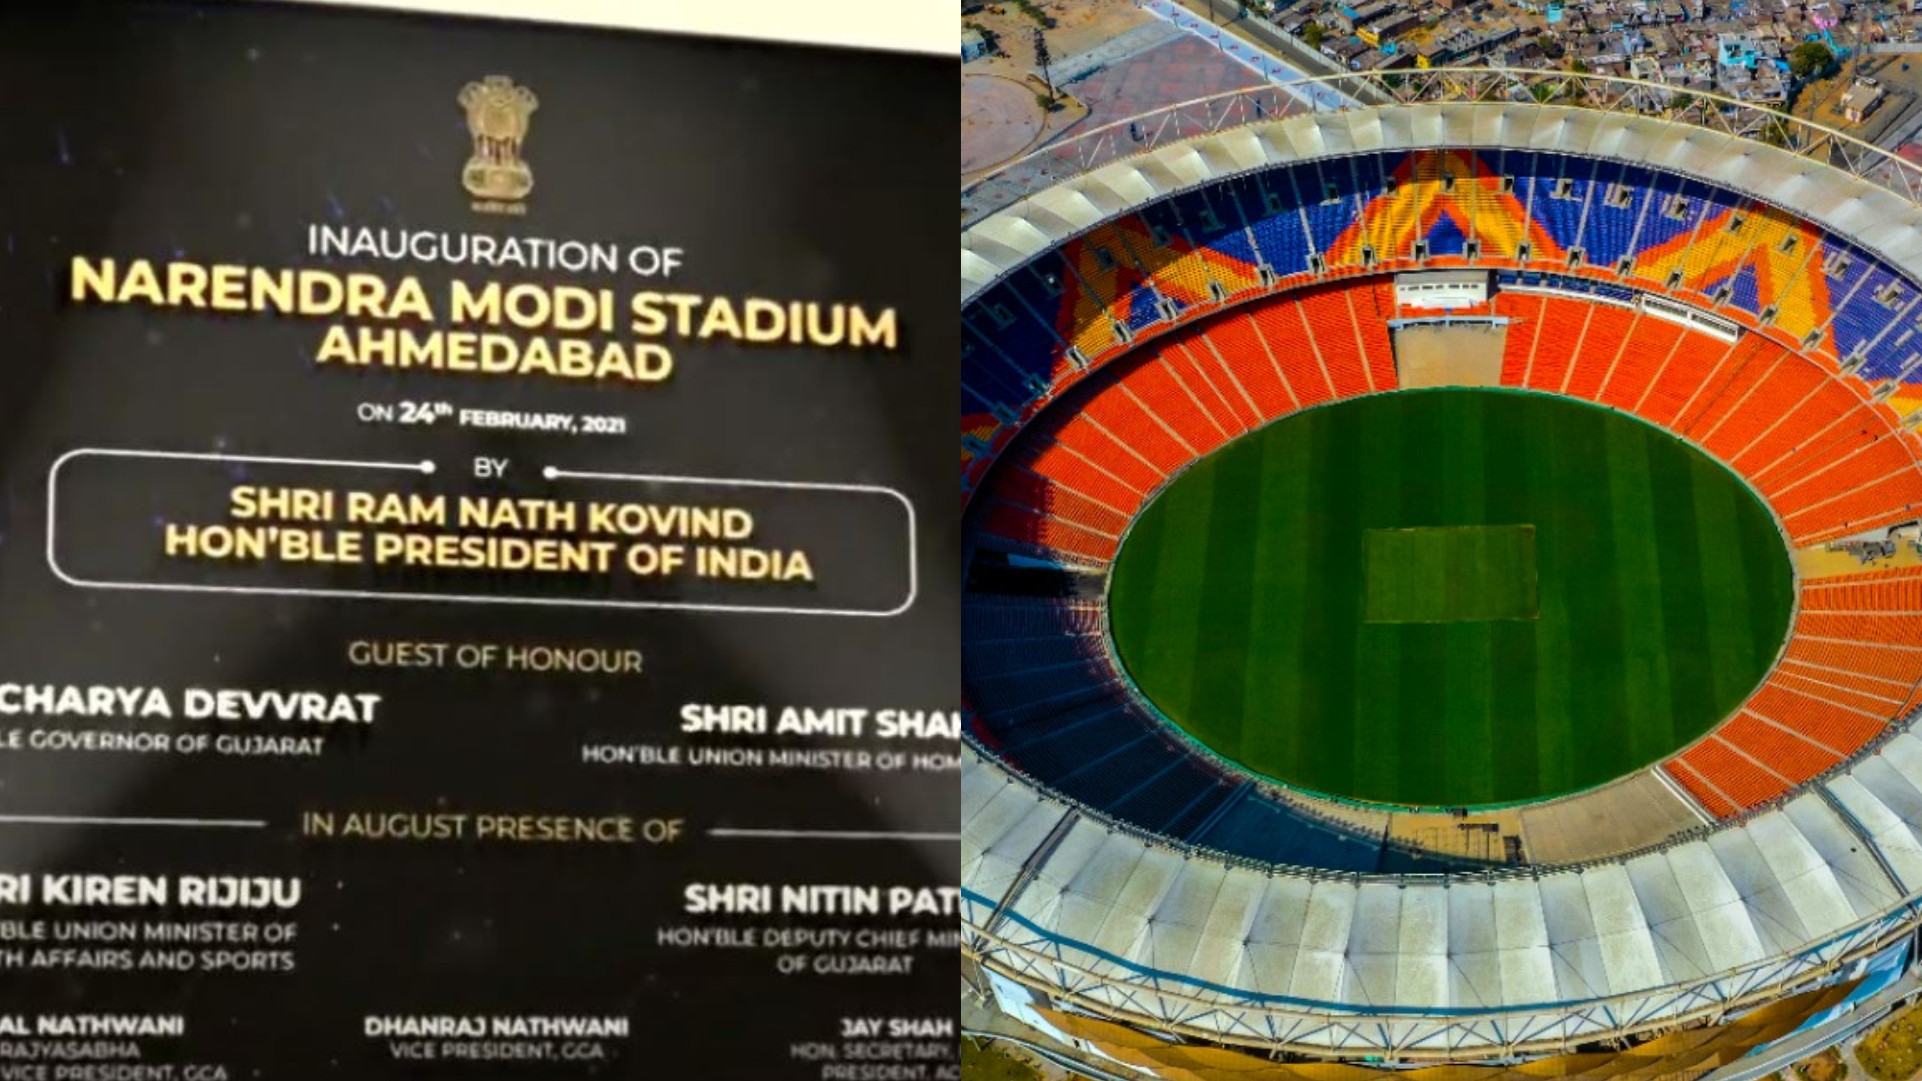 IND v ENG 2021: Ahmedabad's Motera Stadium renamed to Narendra Modi Stadium ahead of 3rd Test